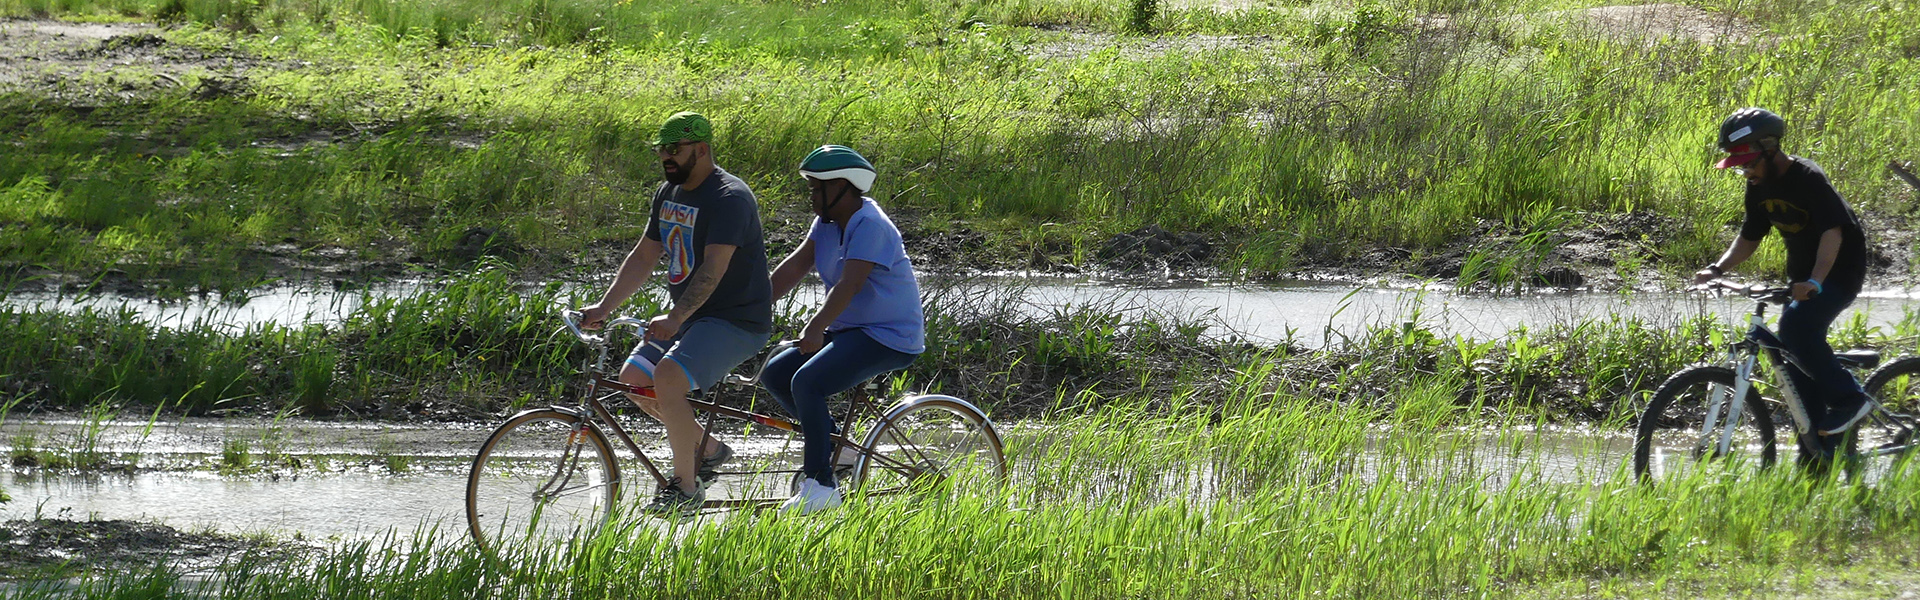 Bike riding in Big Marsh Park